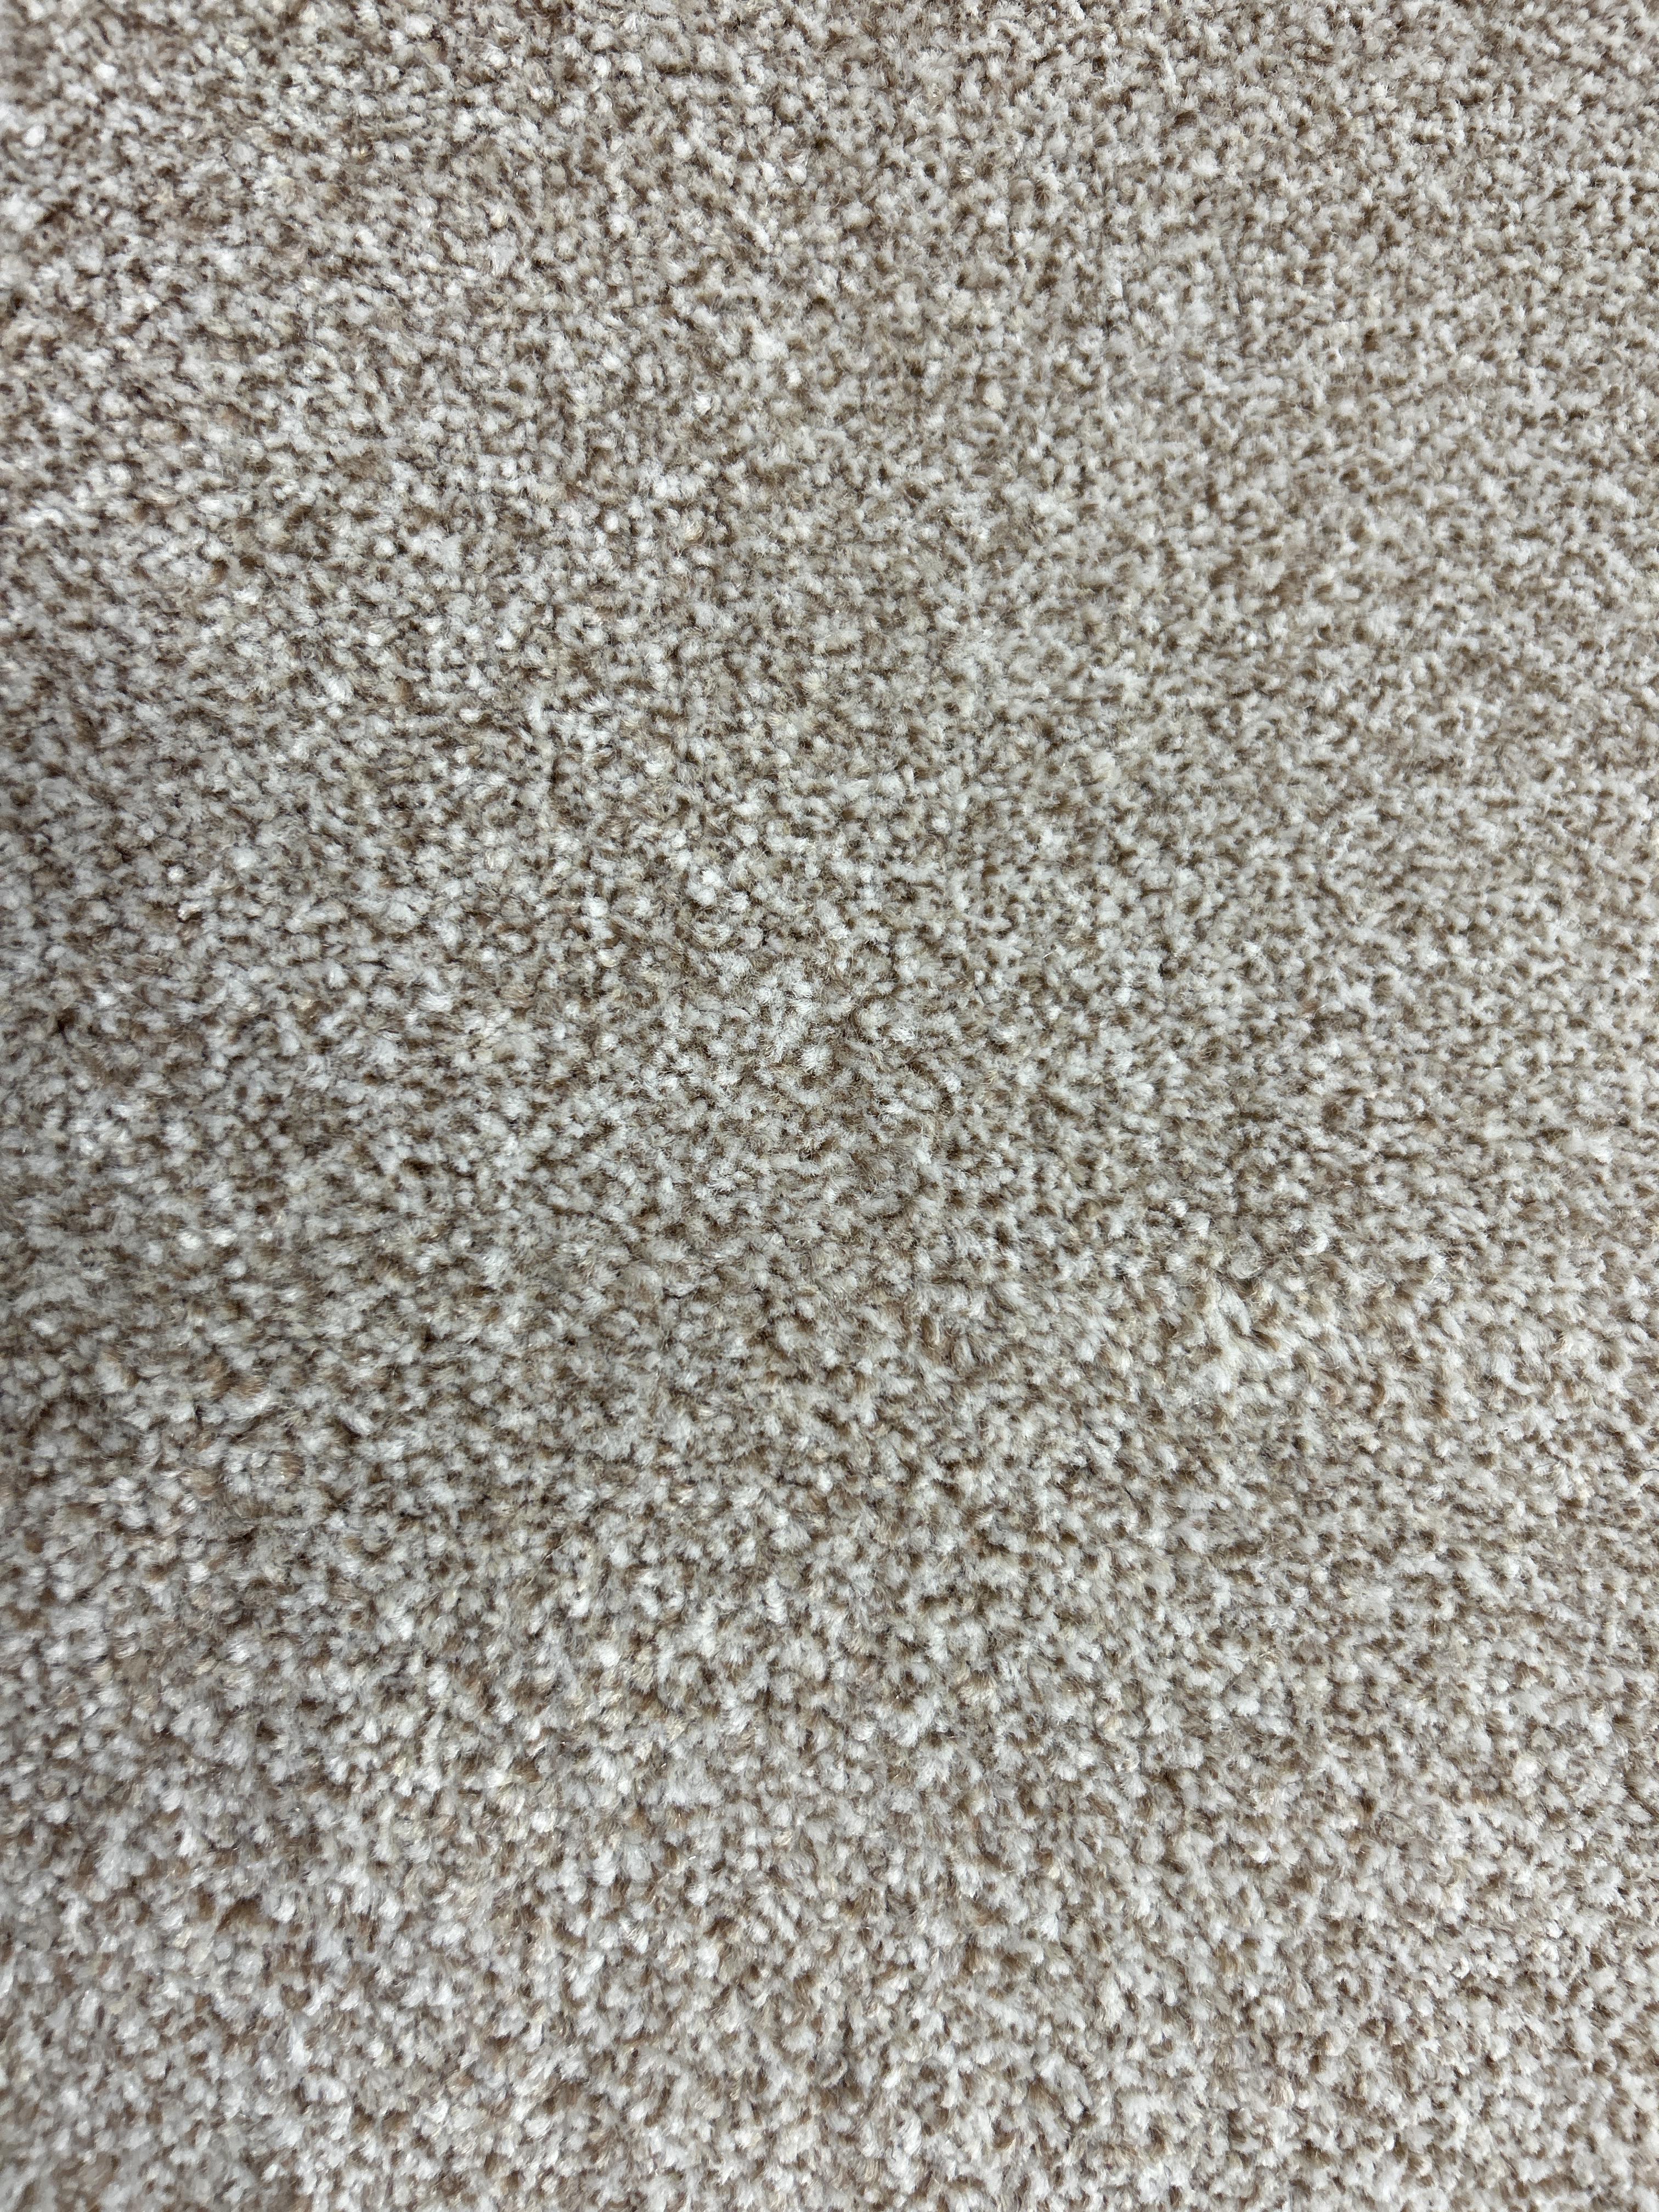 Supertwist Carpet